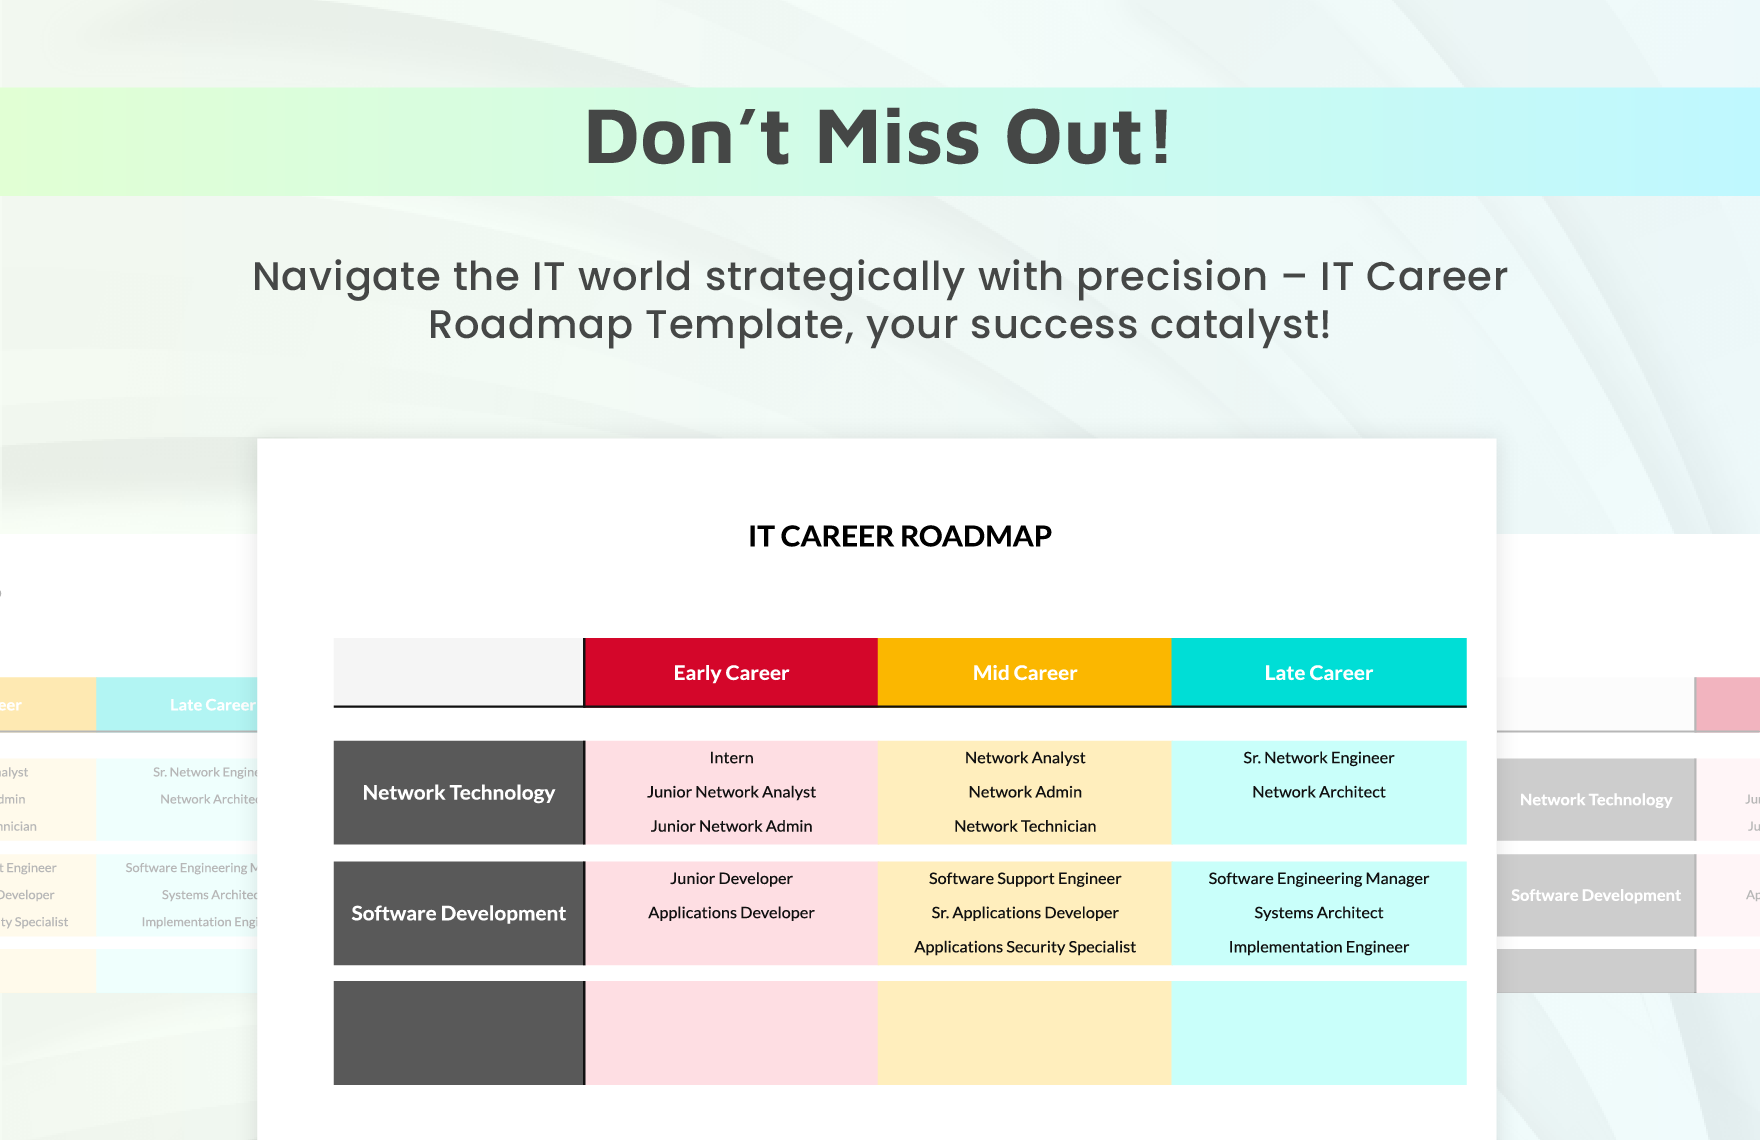 IT Career Roadmap Template